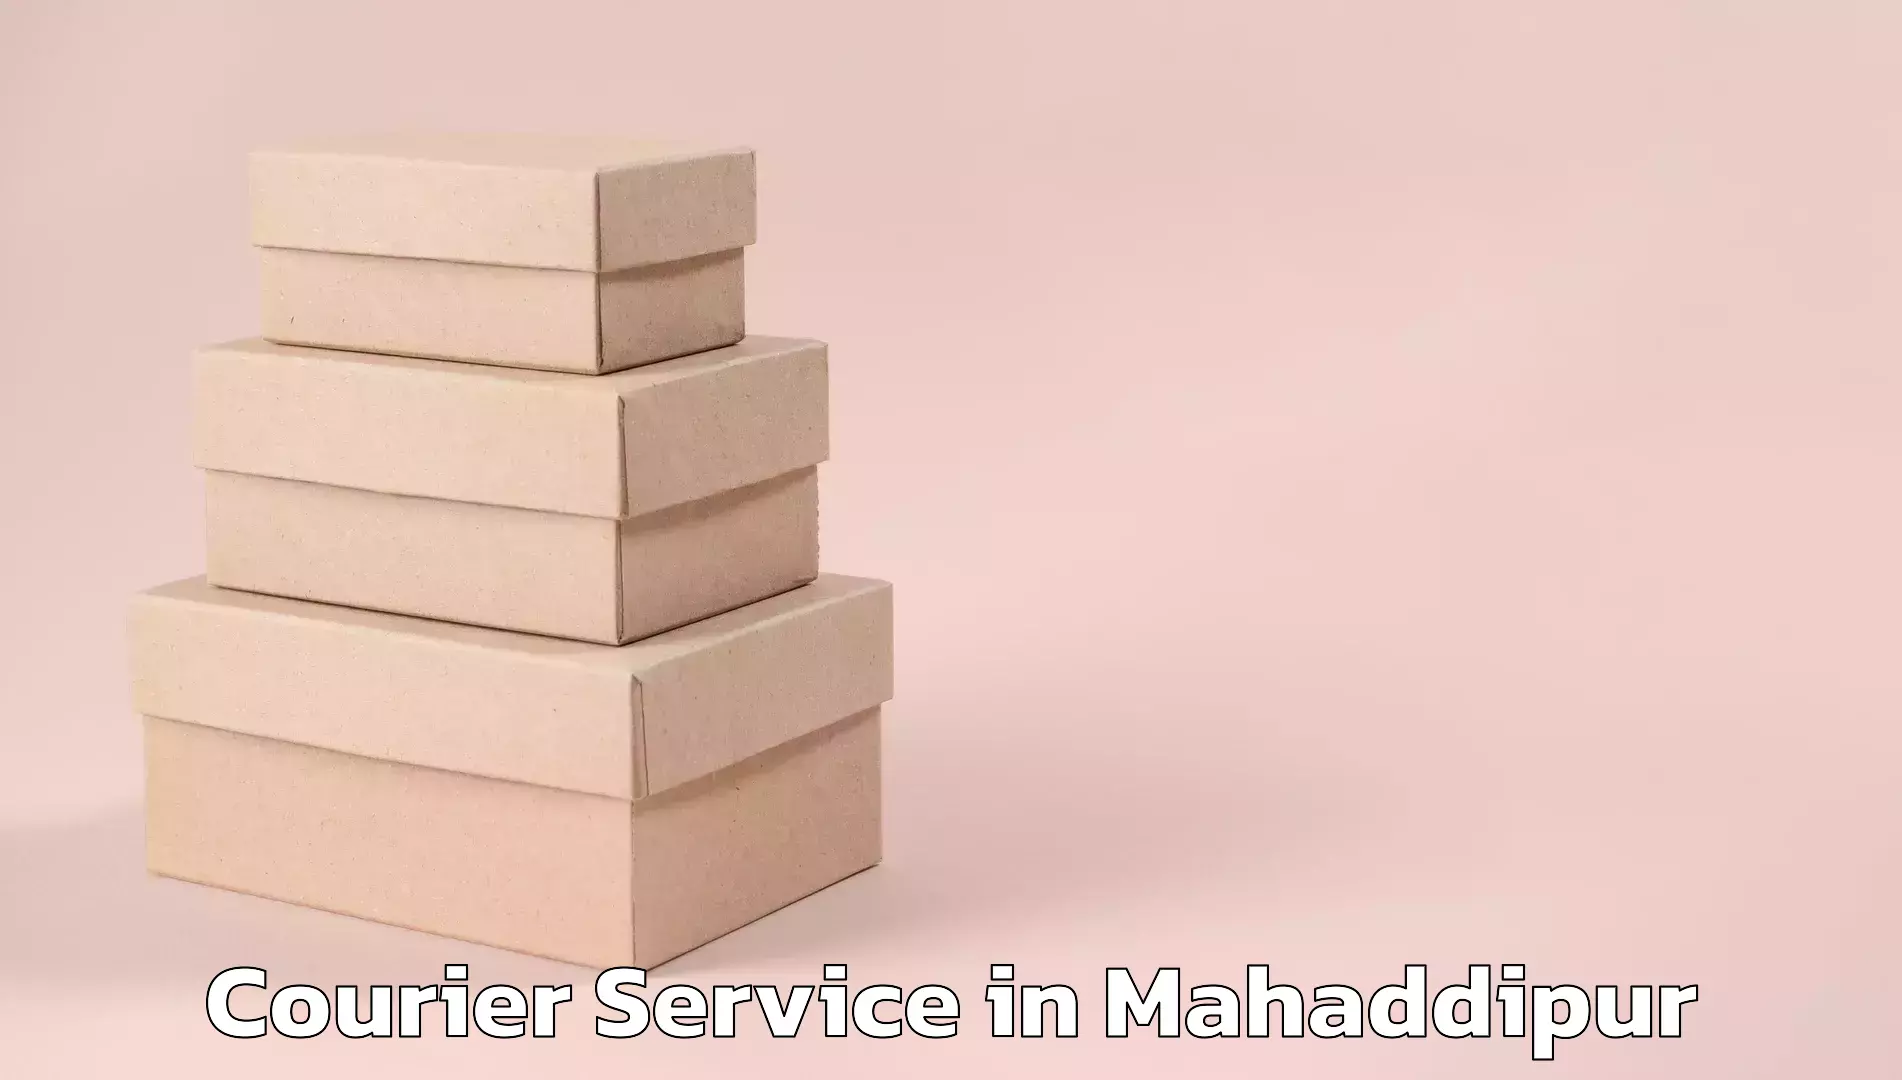 Efficient freight transportation in Mahaddipur